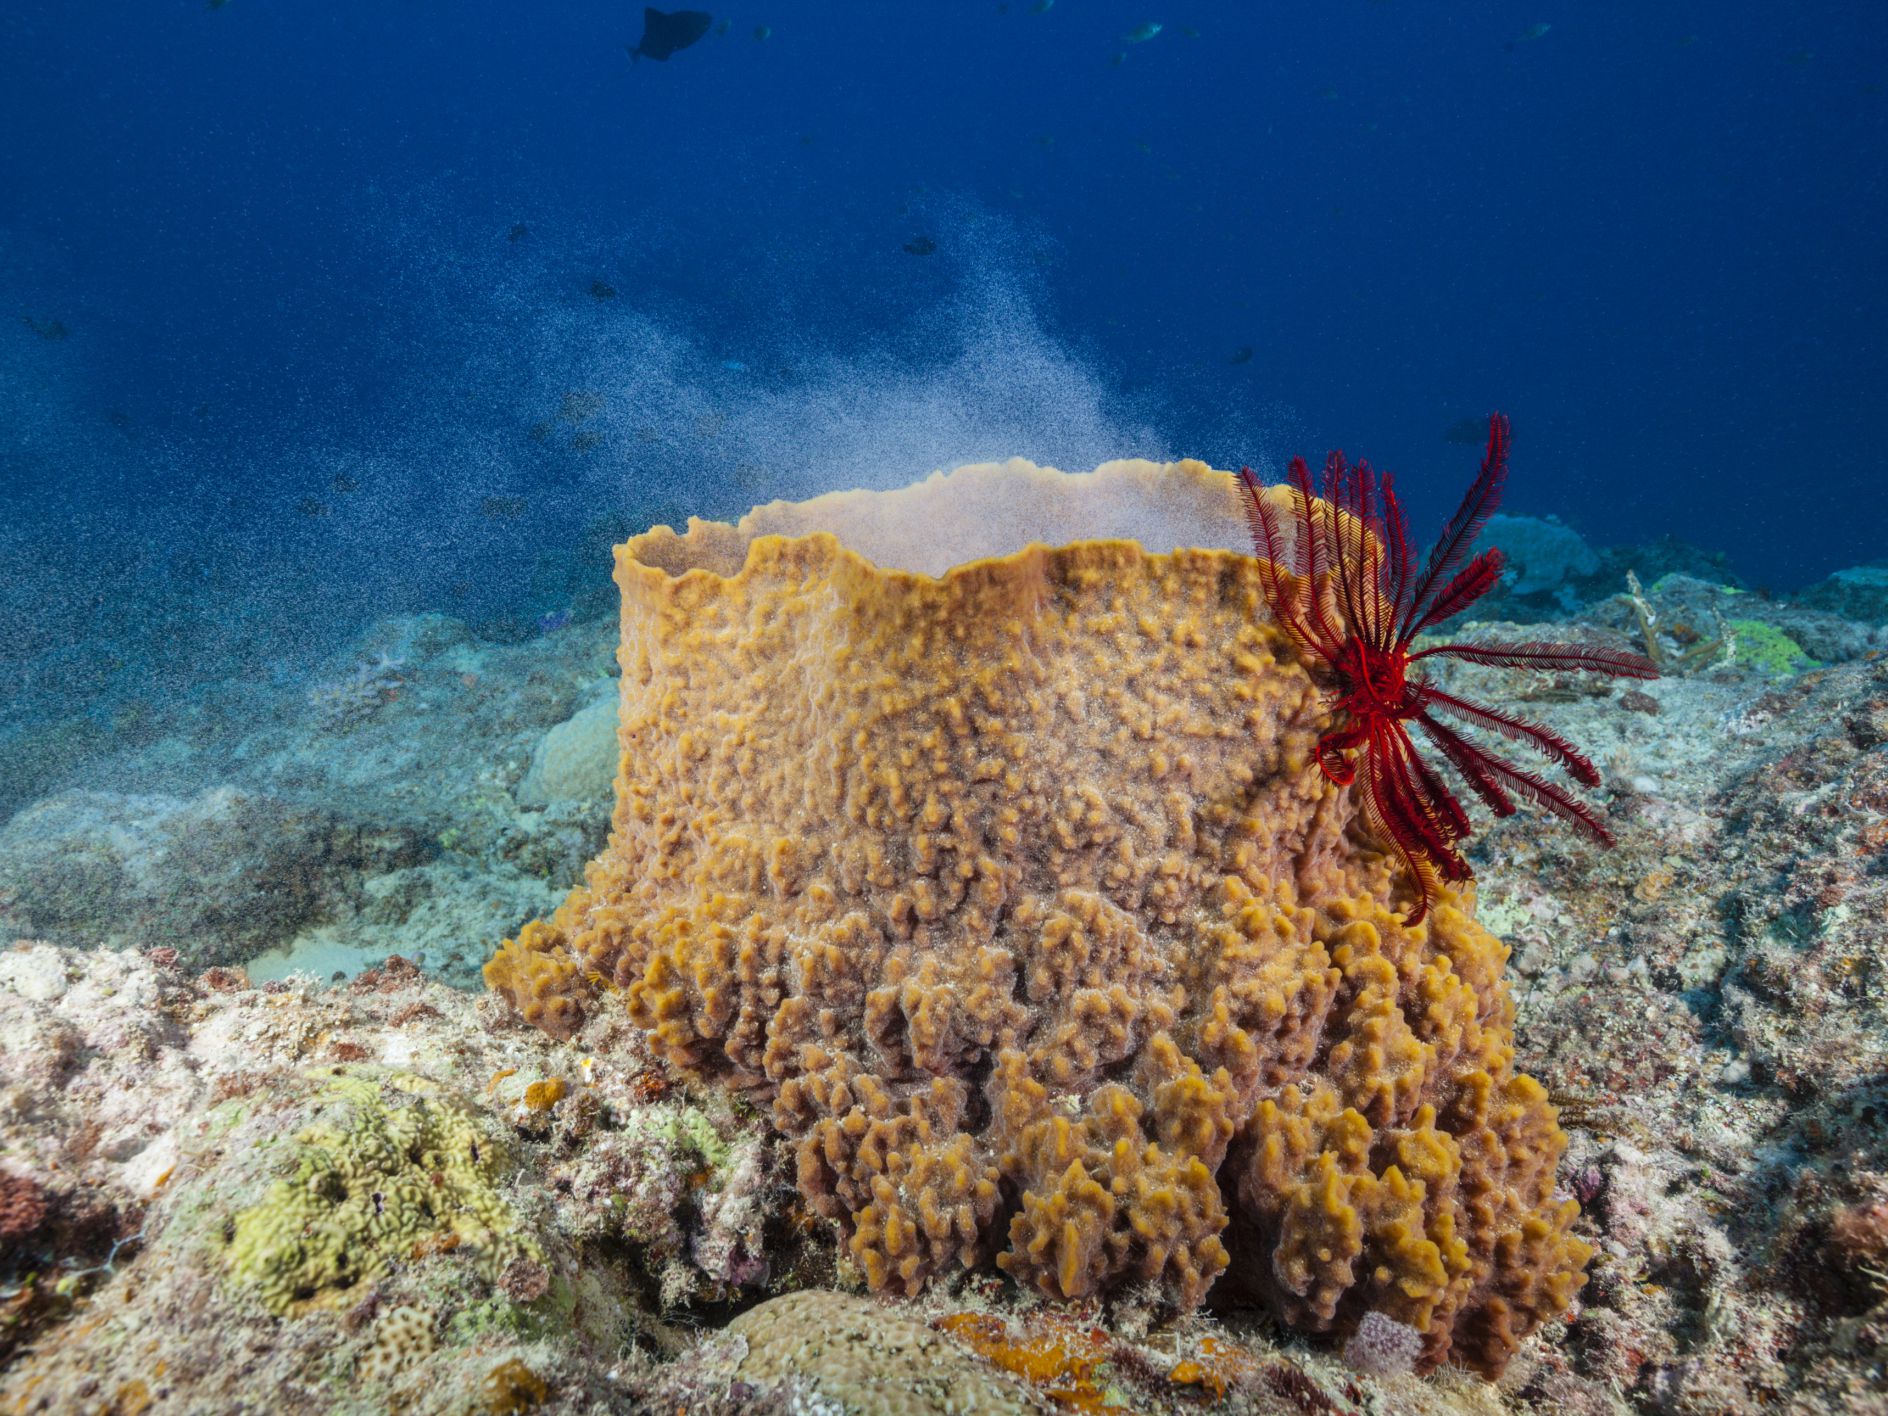 Where do sponges live in the ocean?